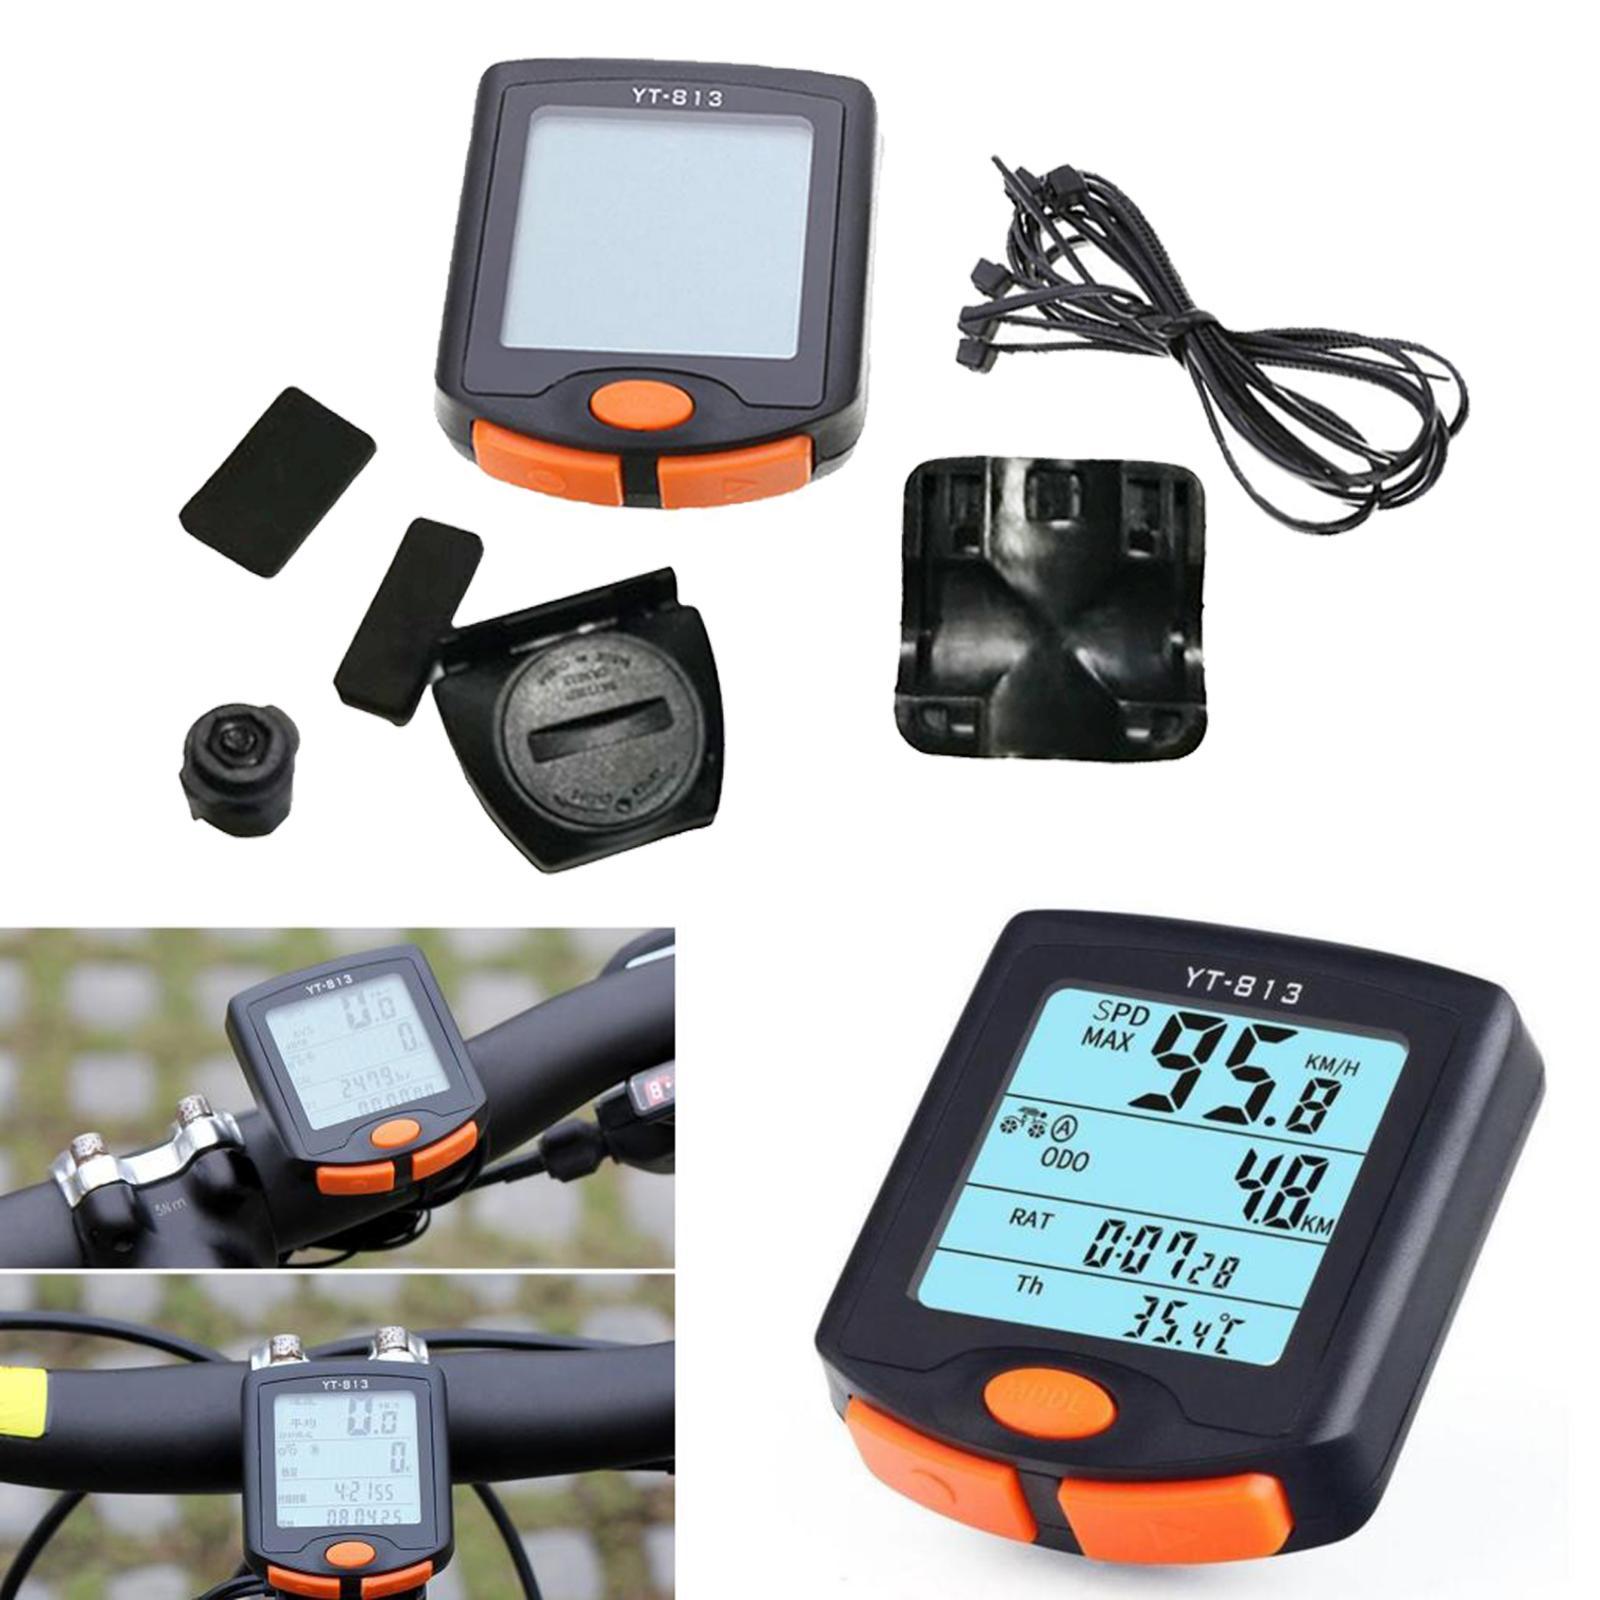 LCD Computer  Road  Bike Backlight   Wireless